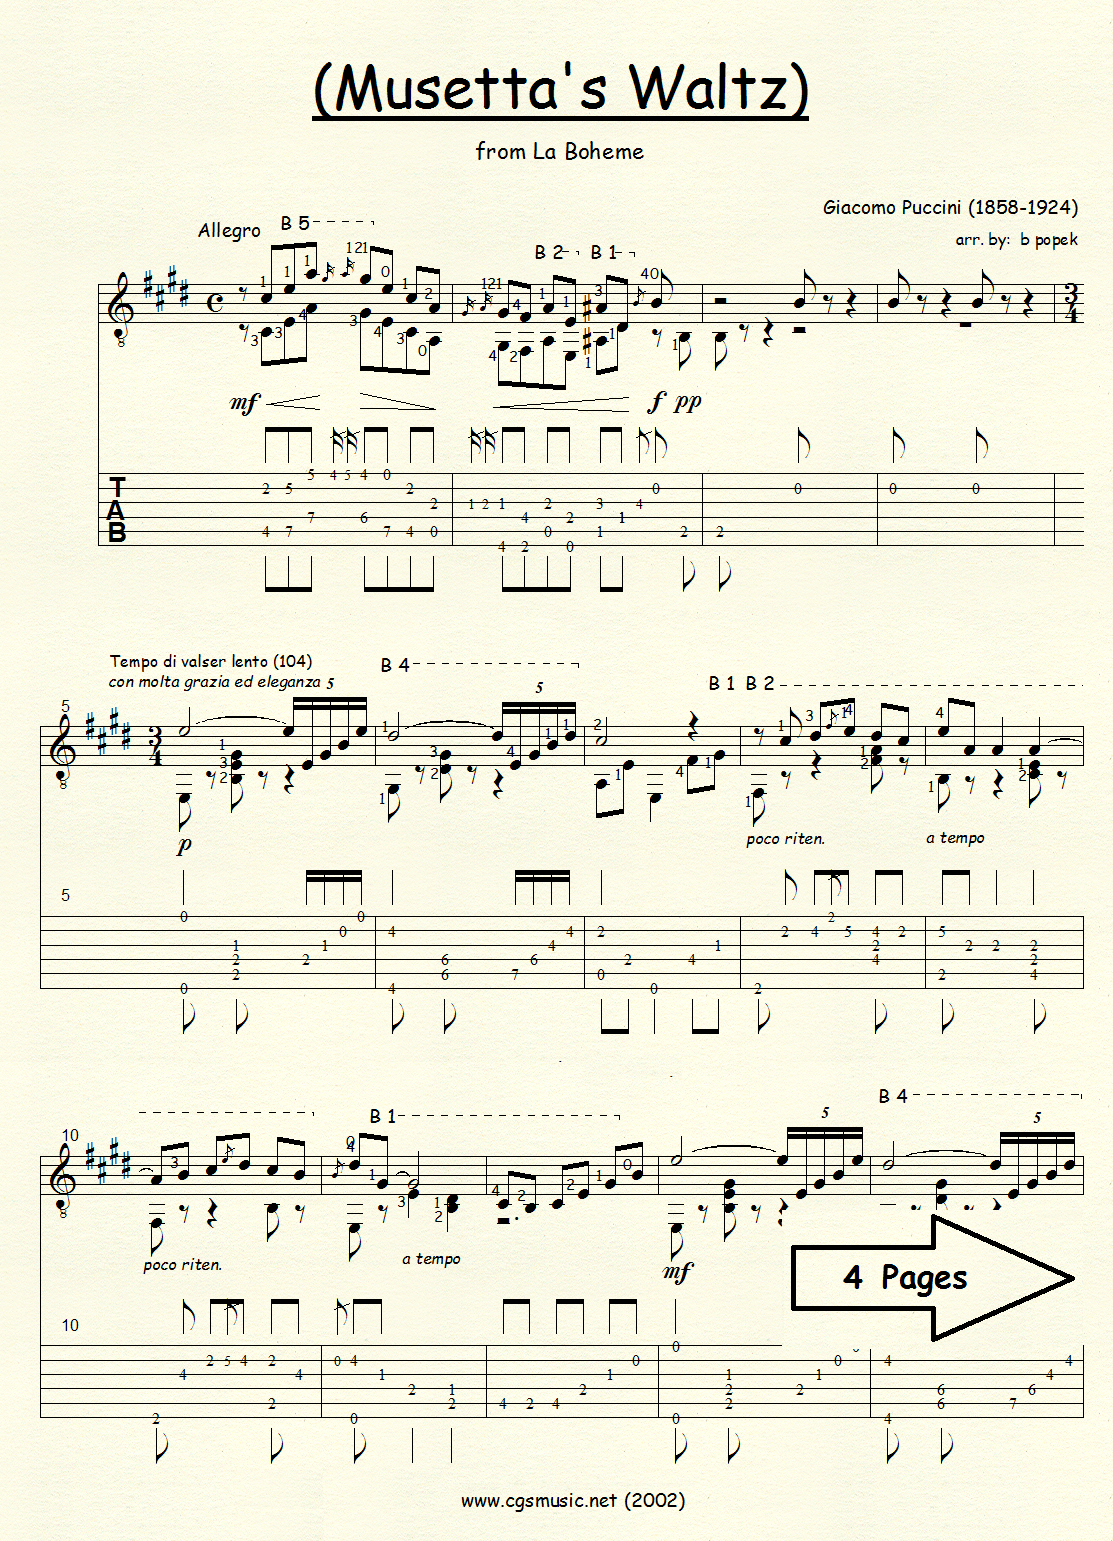 Musetta's Waltz (Puccini) for Classical Guitar in Tablature